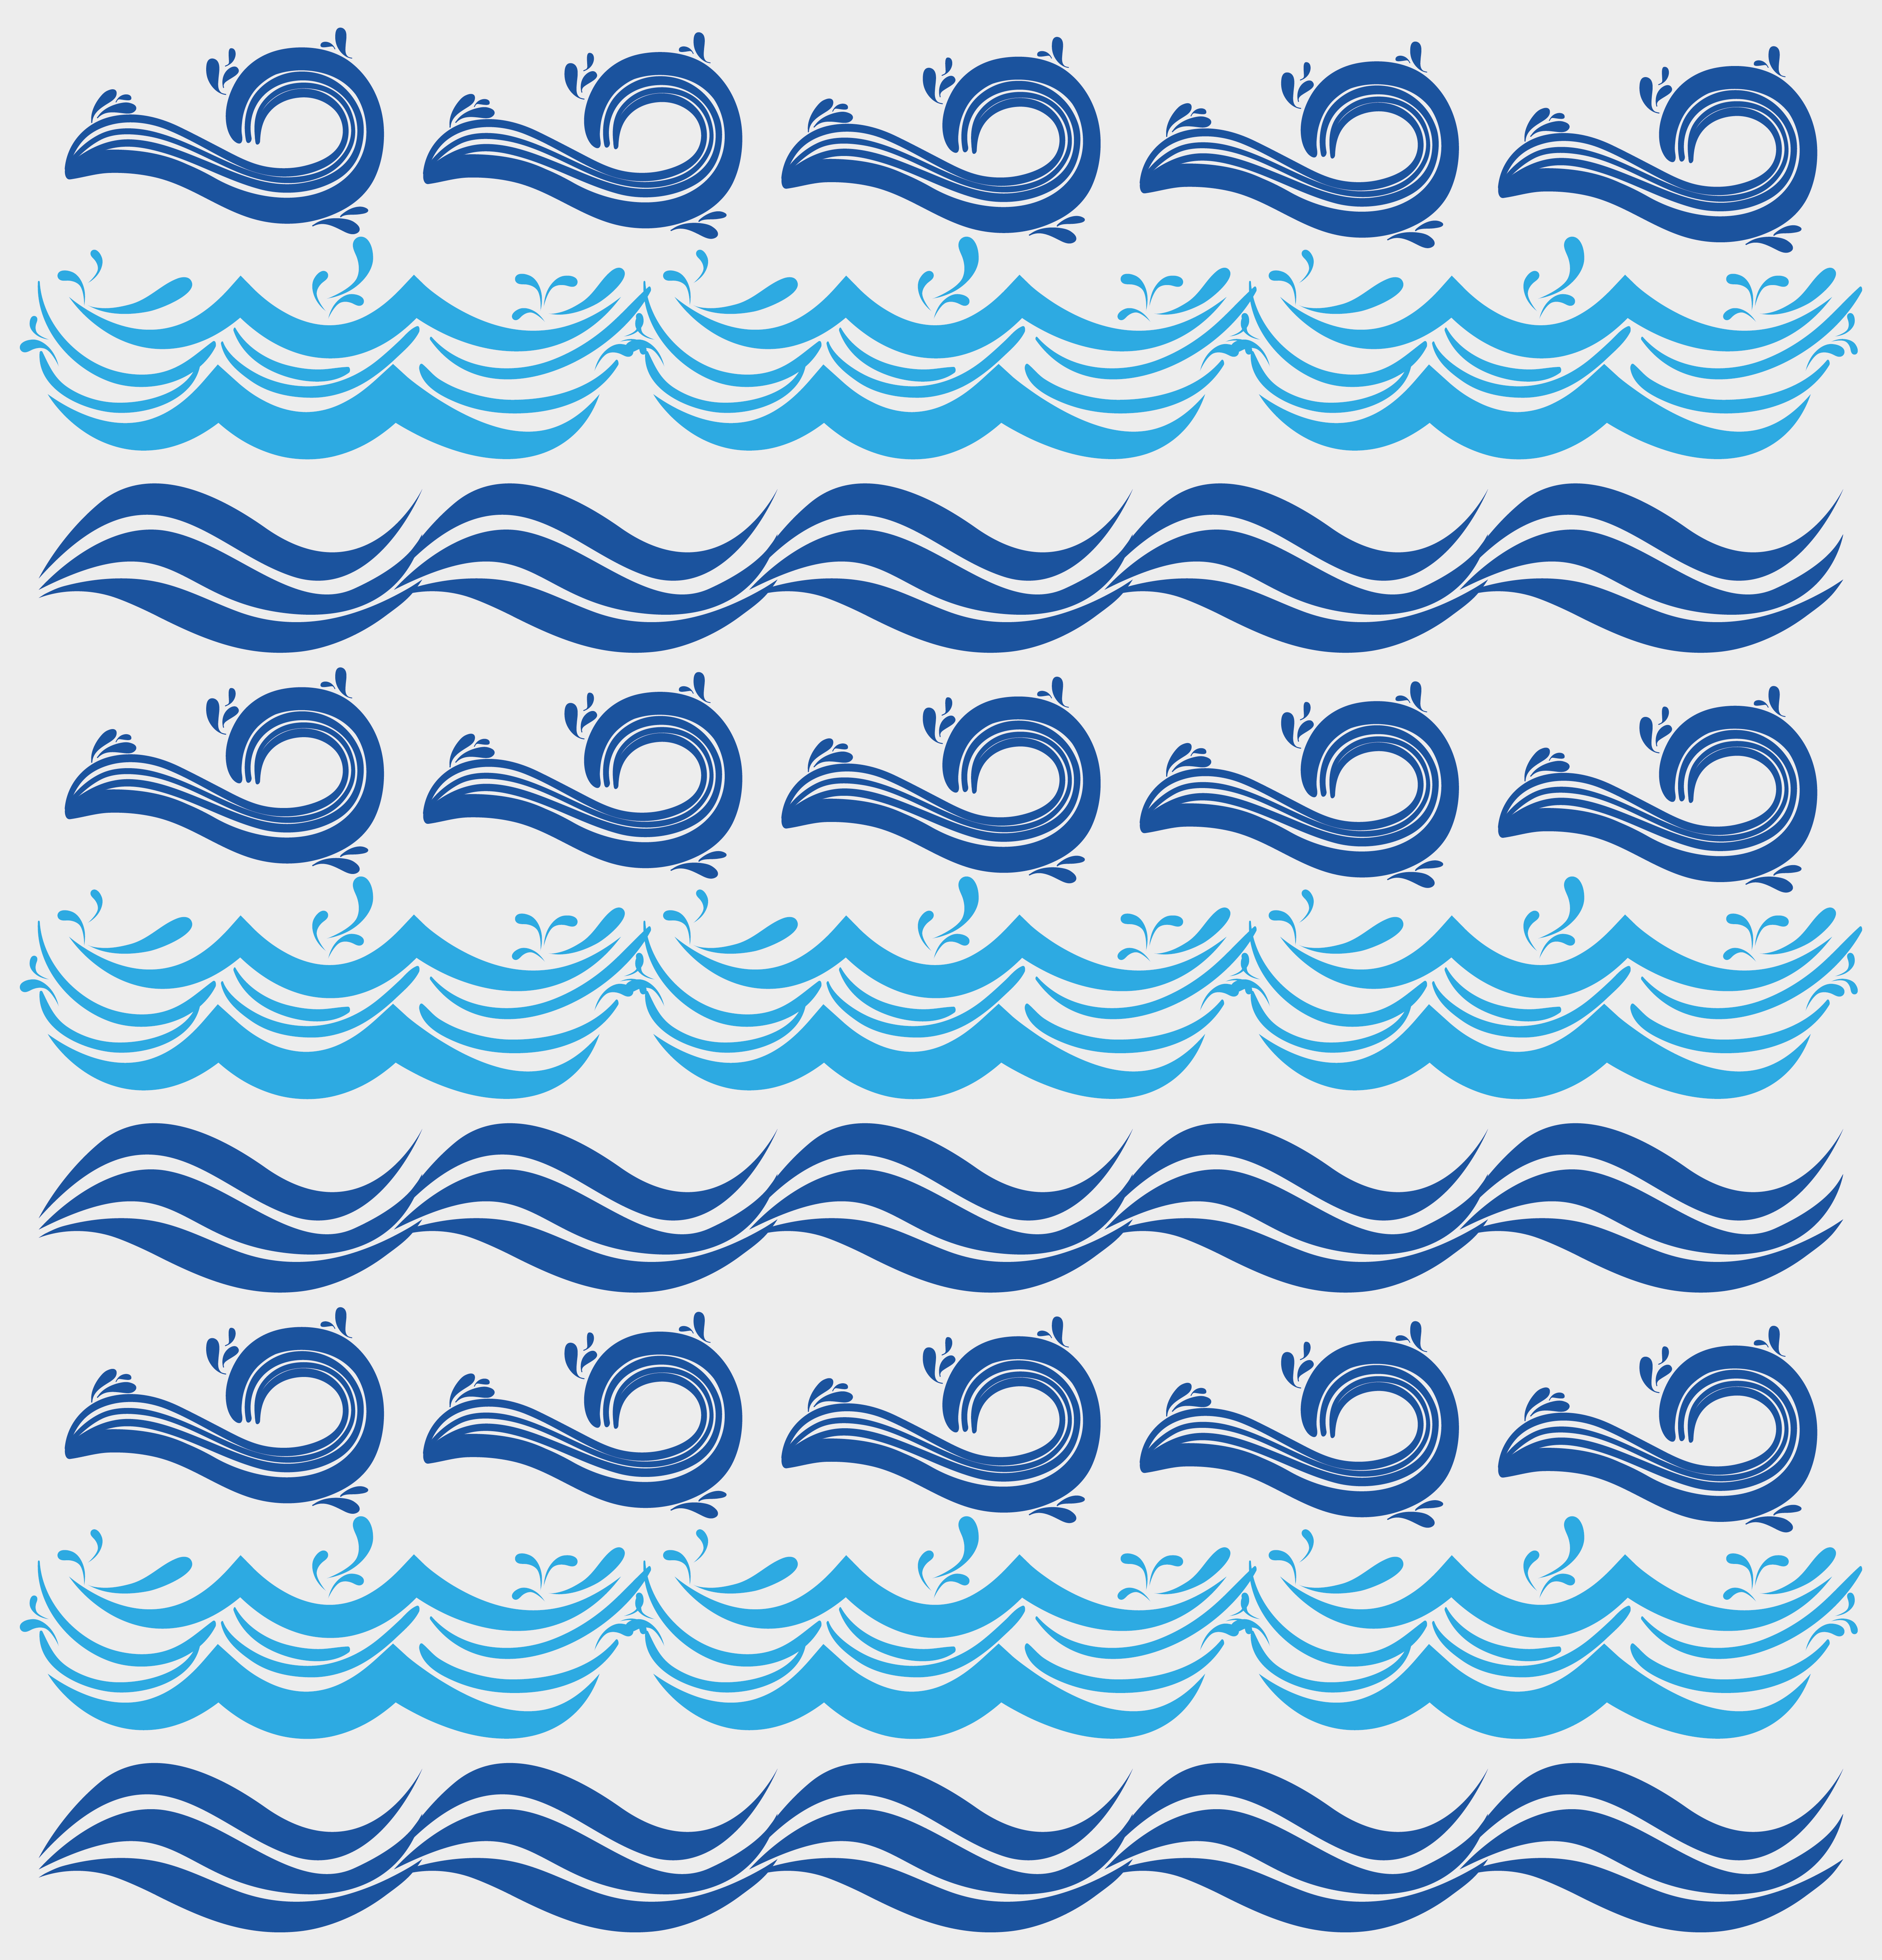 Download natural ocean waves background design - Download Free Vectors, Clipart Graphics & Vector Art